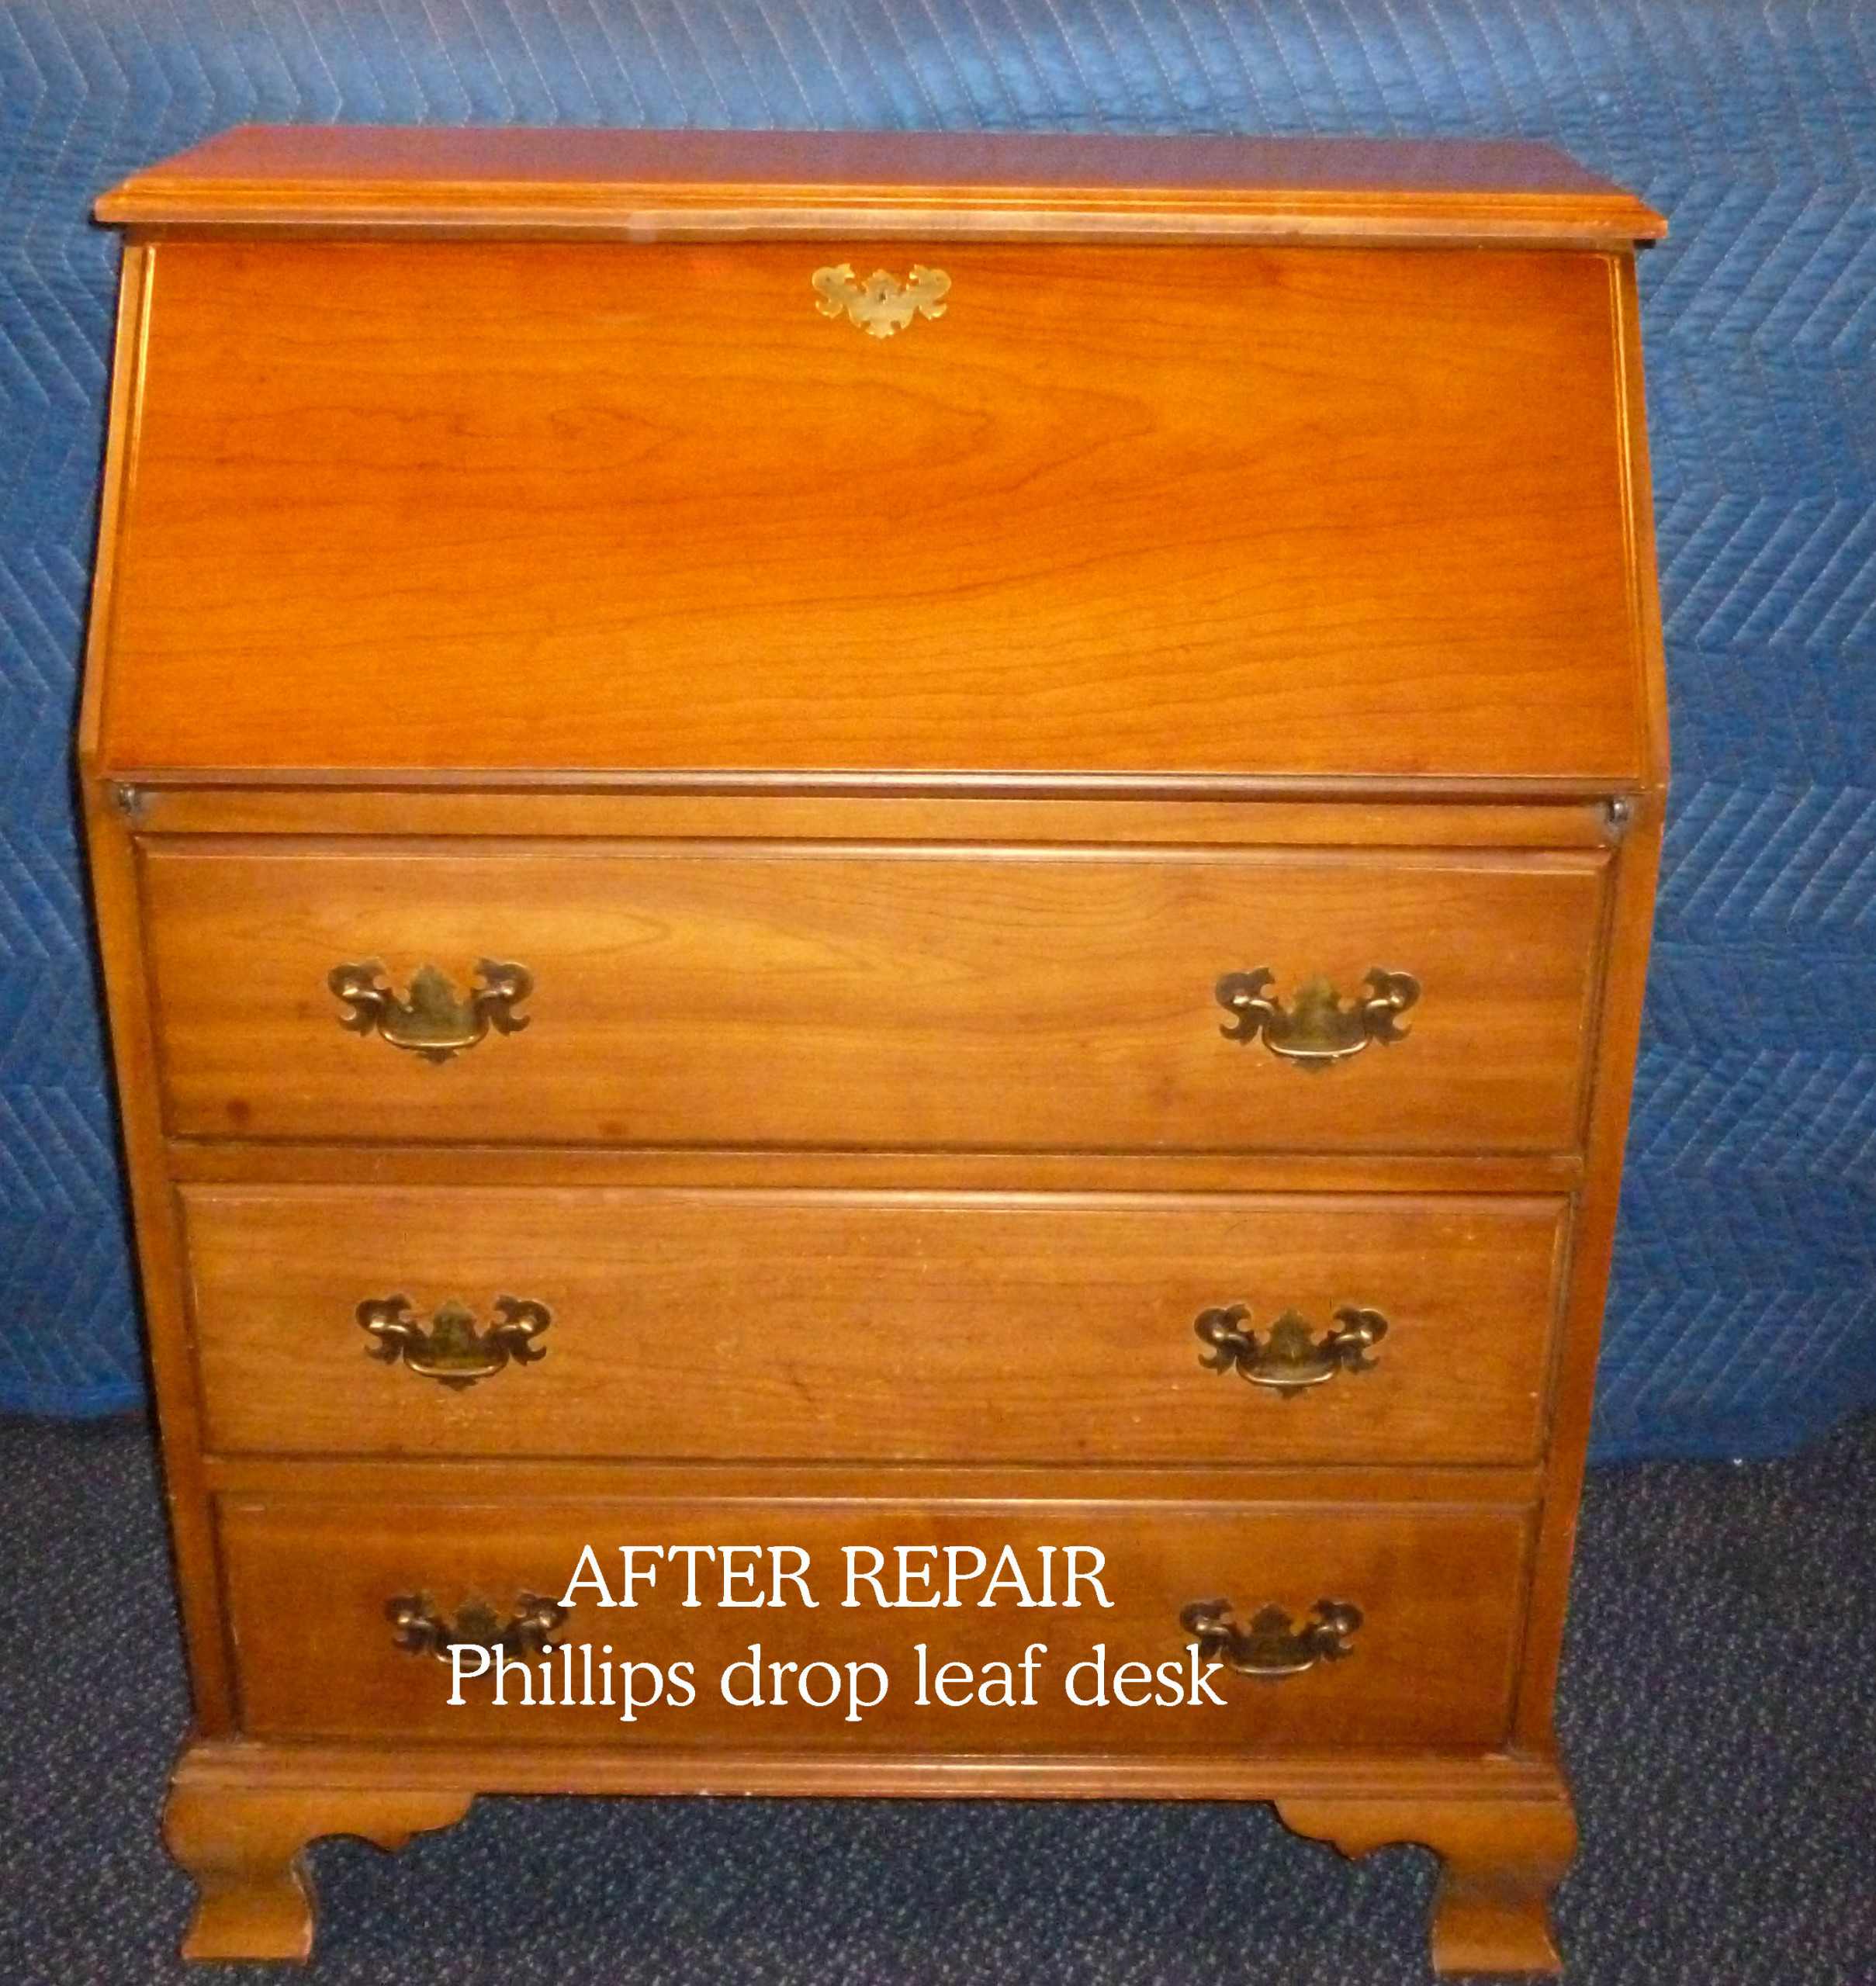 Phillips drop leaf desk repair